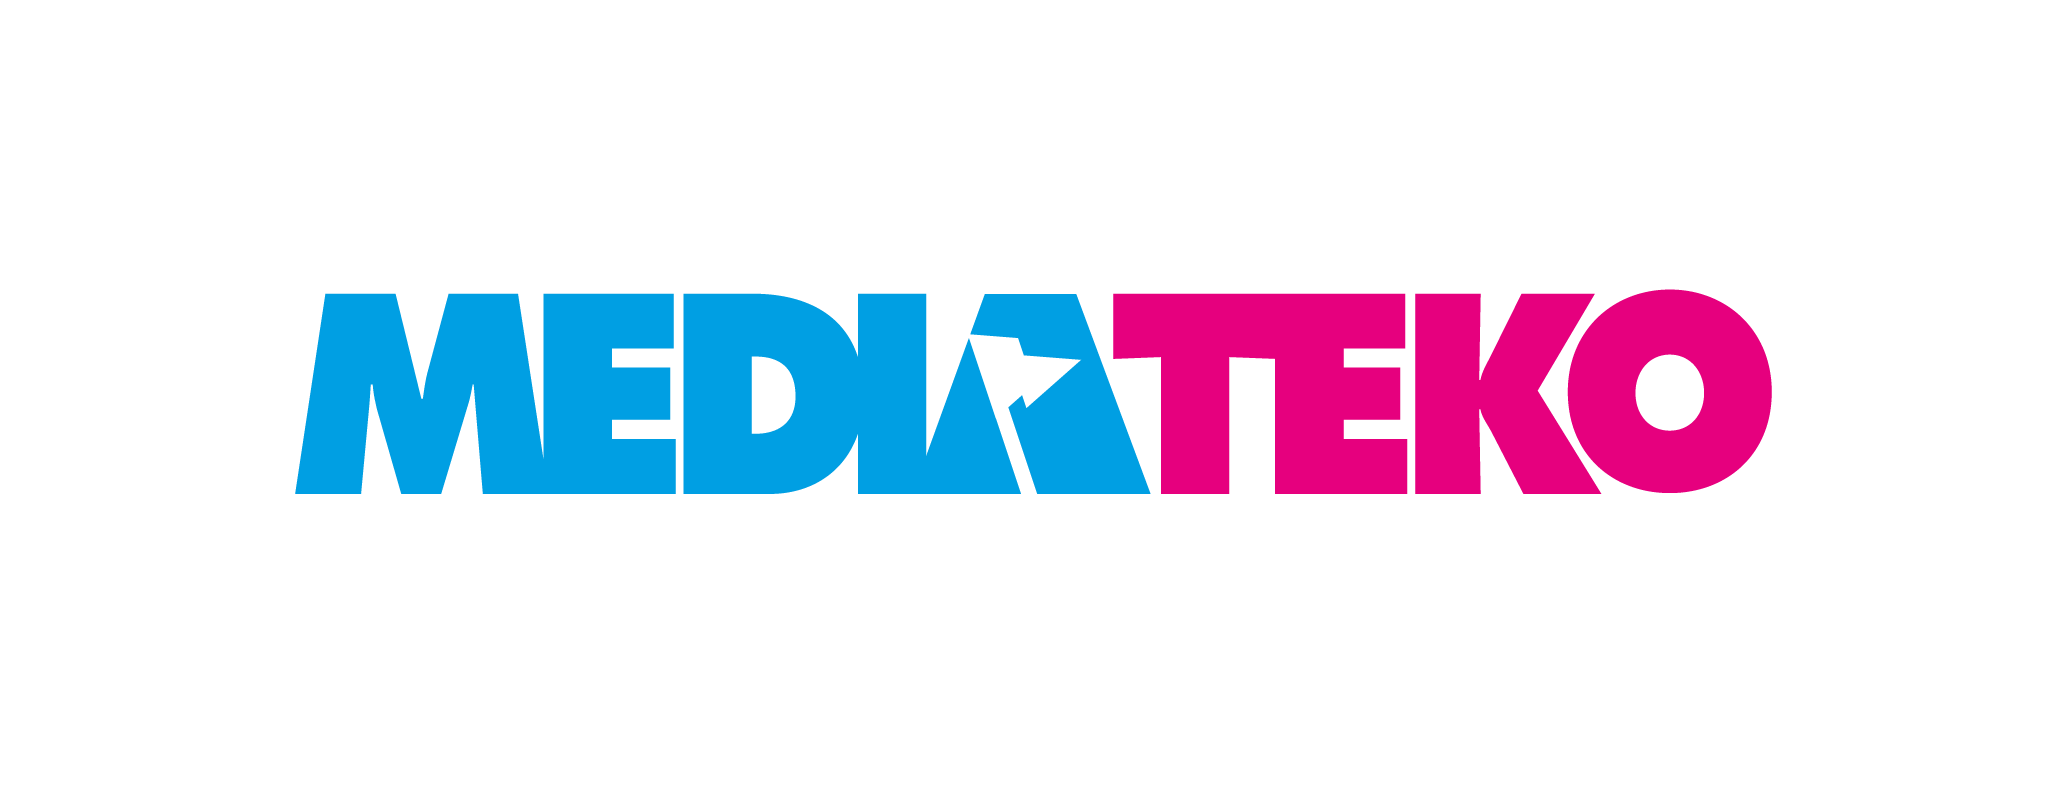 Mediateko logo